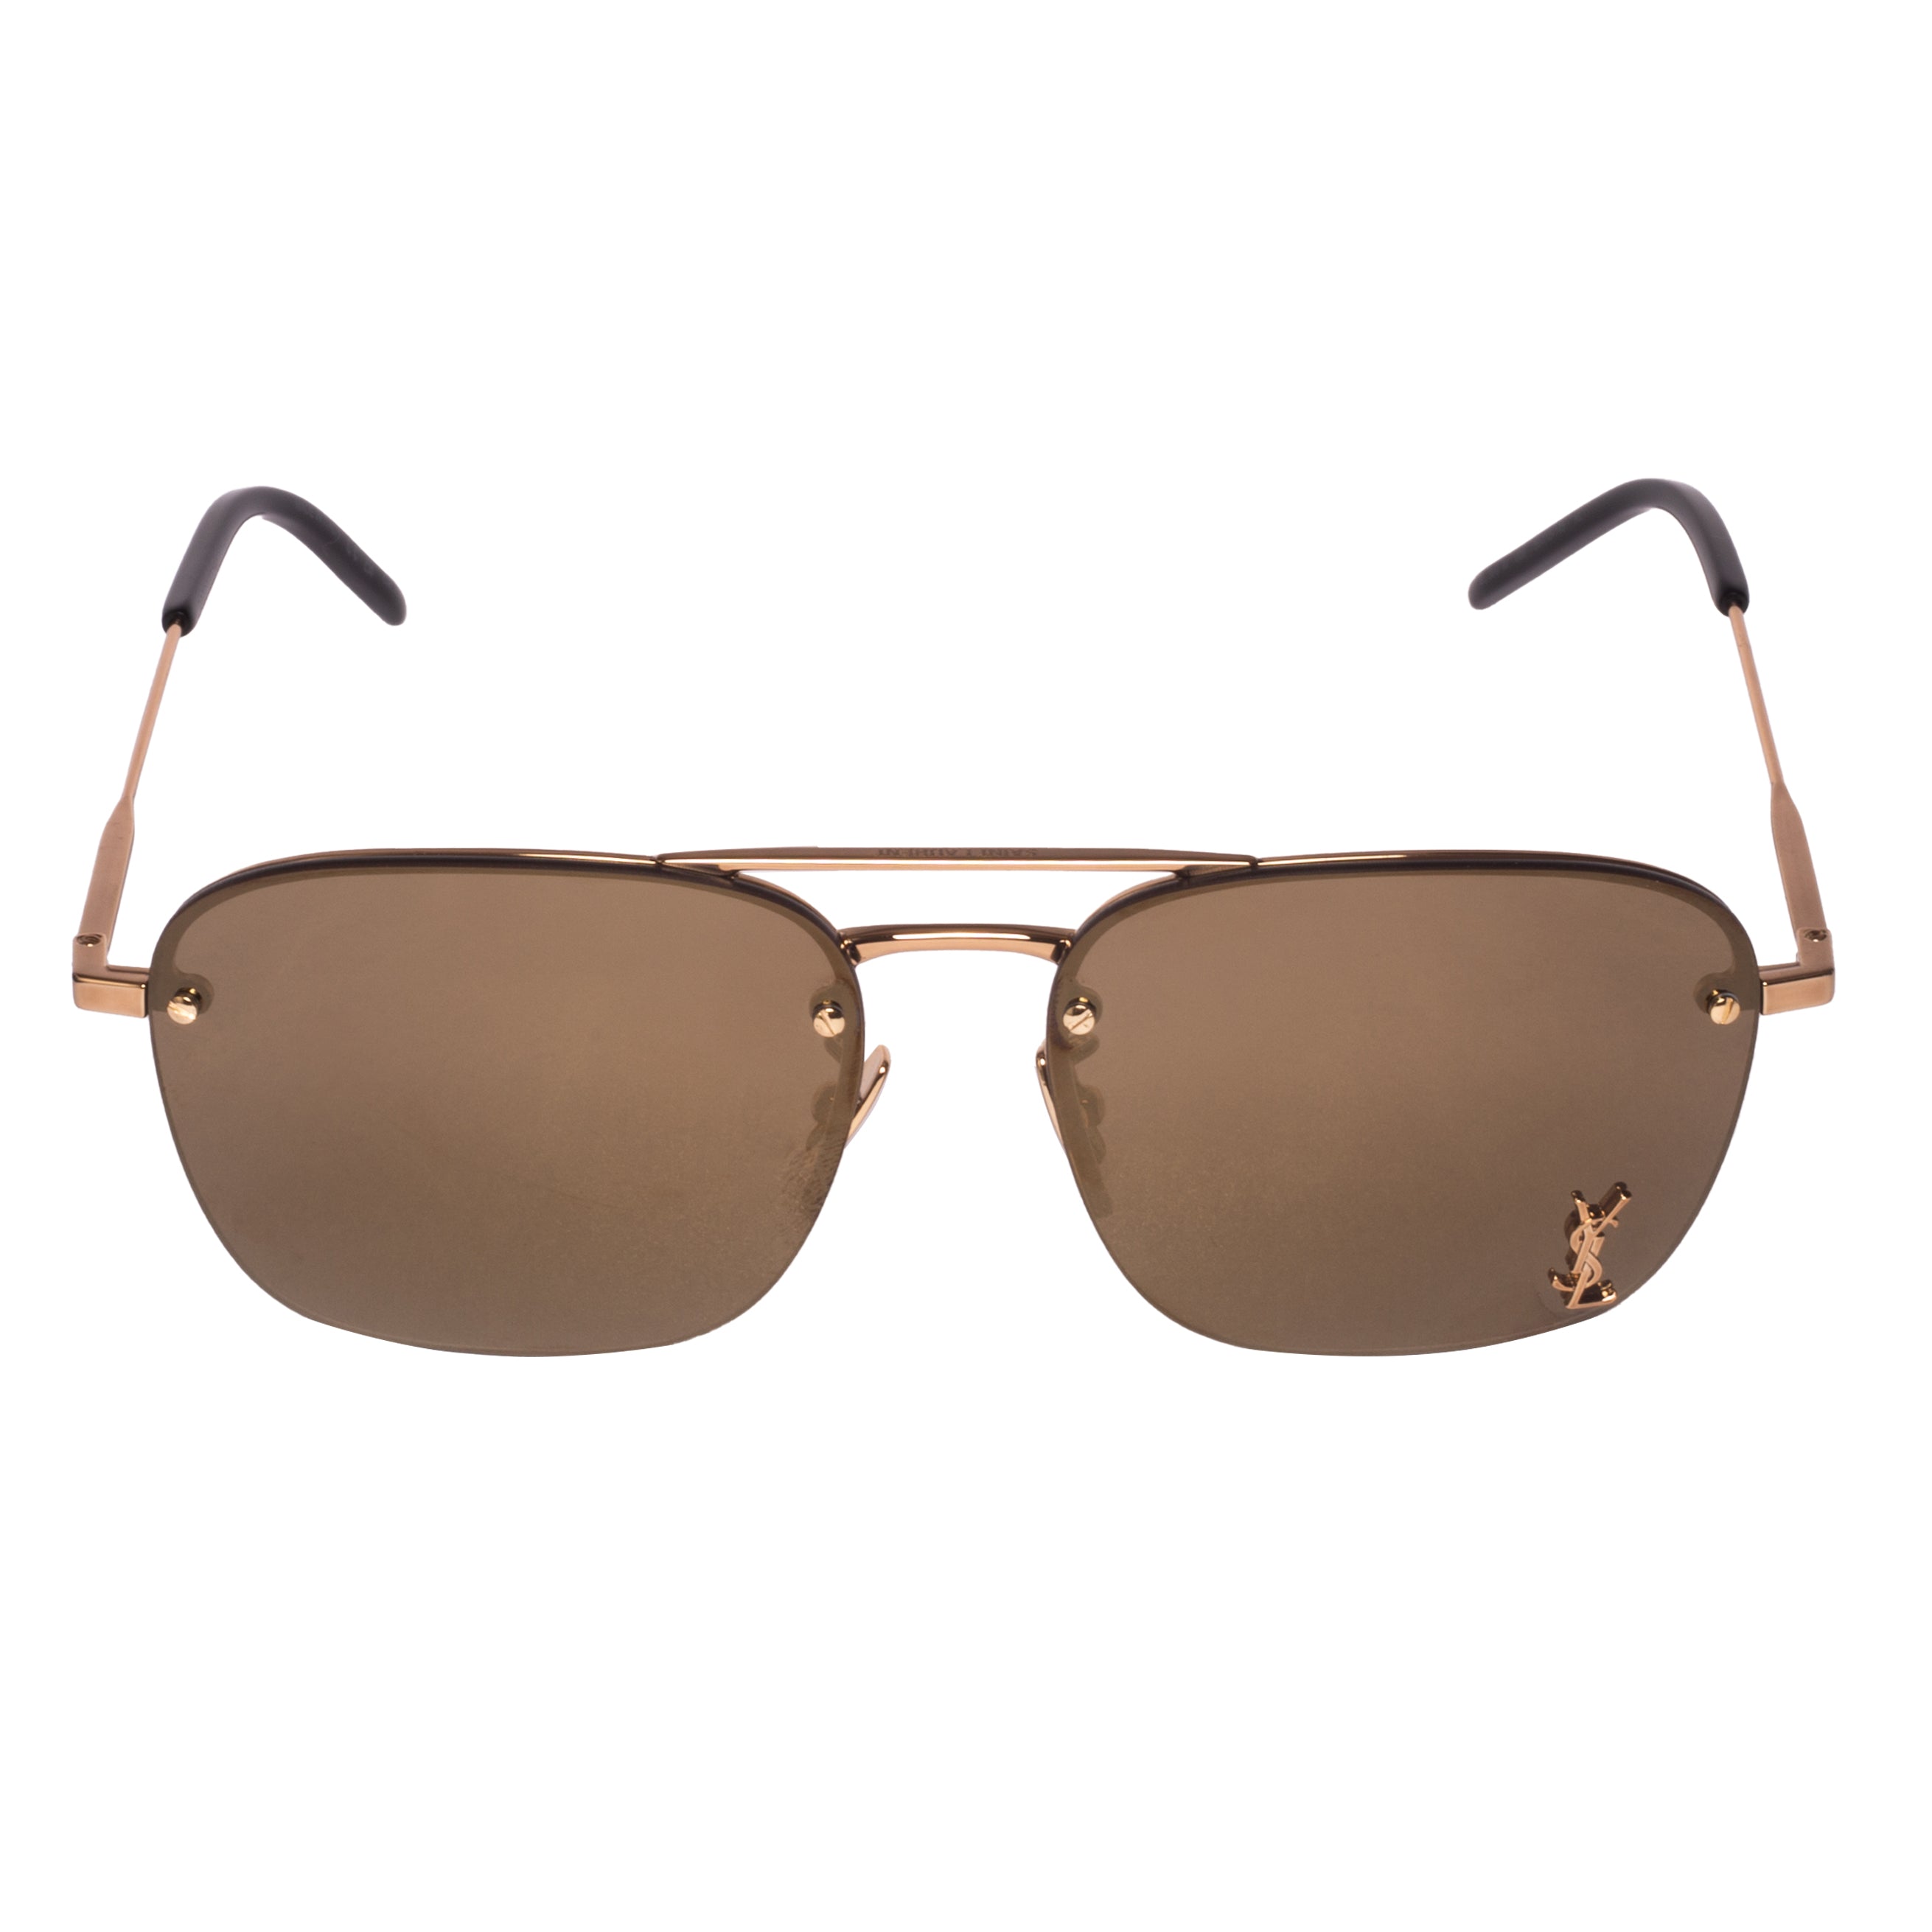 Saint Laurent-SL309-59-008 Sunglasses - Premium Sunglasses from Saint Laurent - Just Rs. 27900! Shop now at Laxmi Opticians